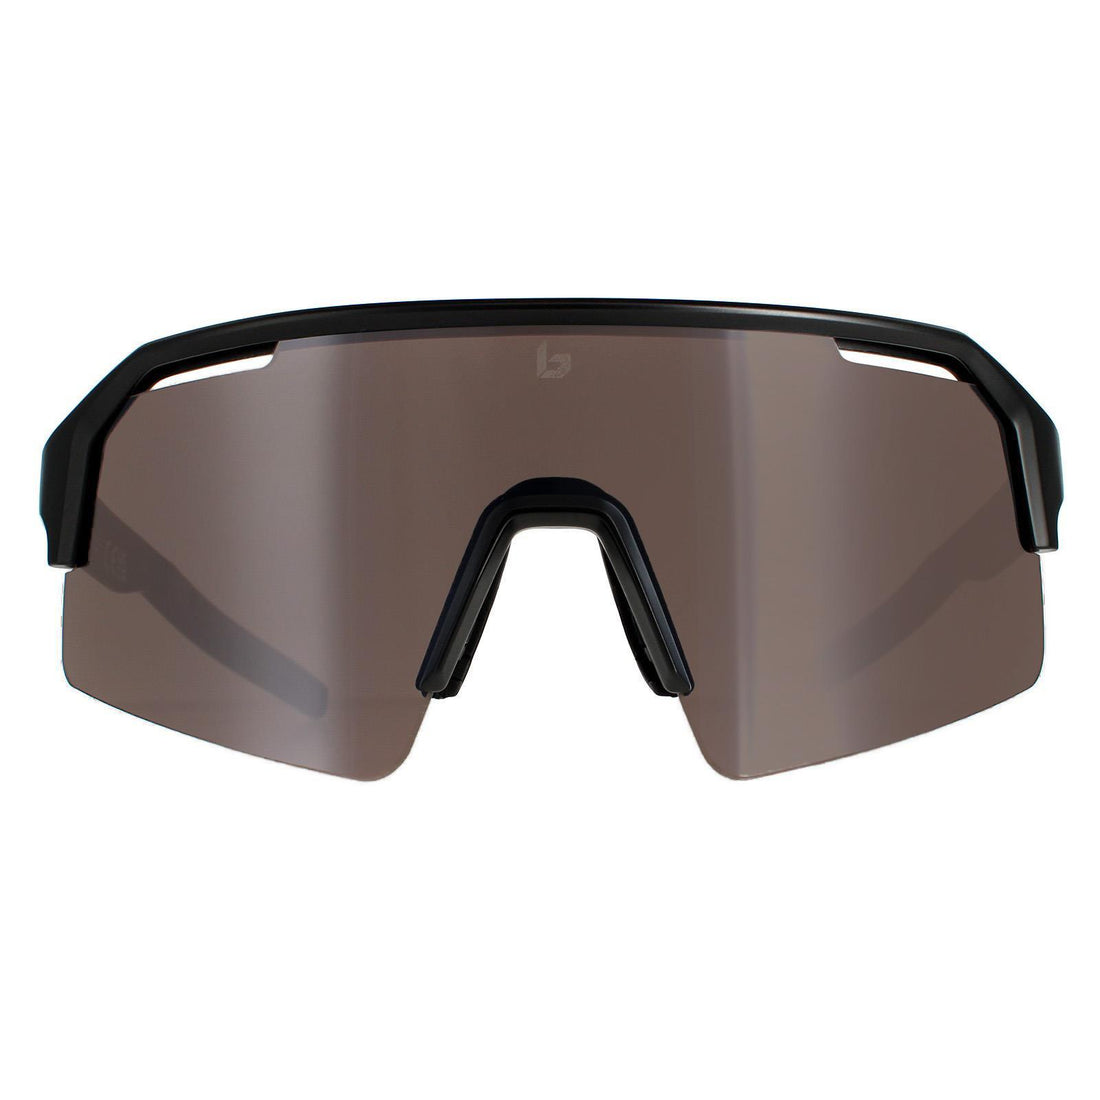 Bolle C-Shifter Sunglasses Matte Black Volt Gun